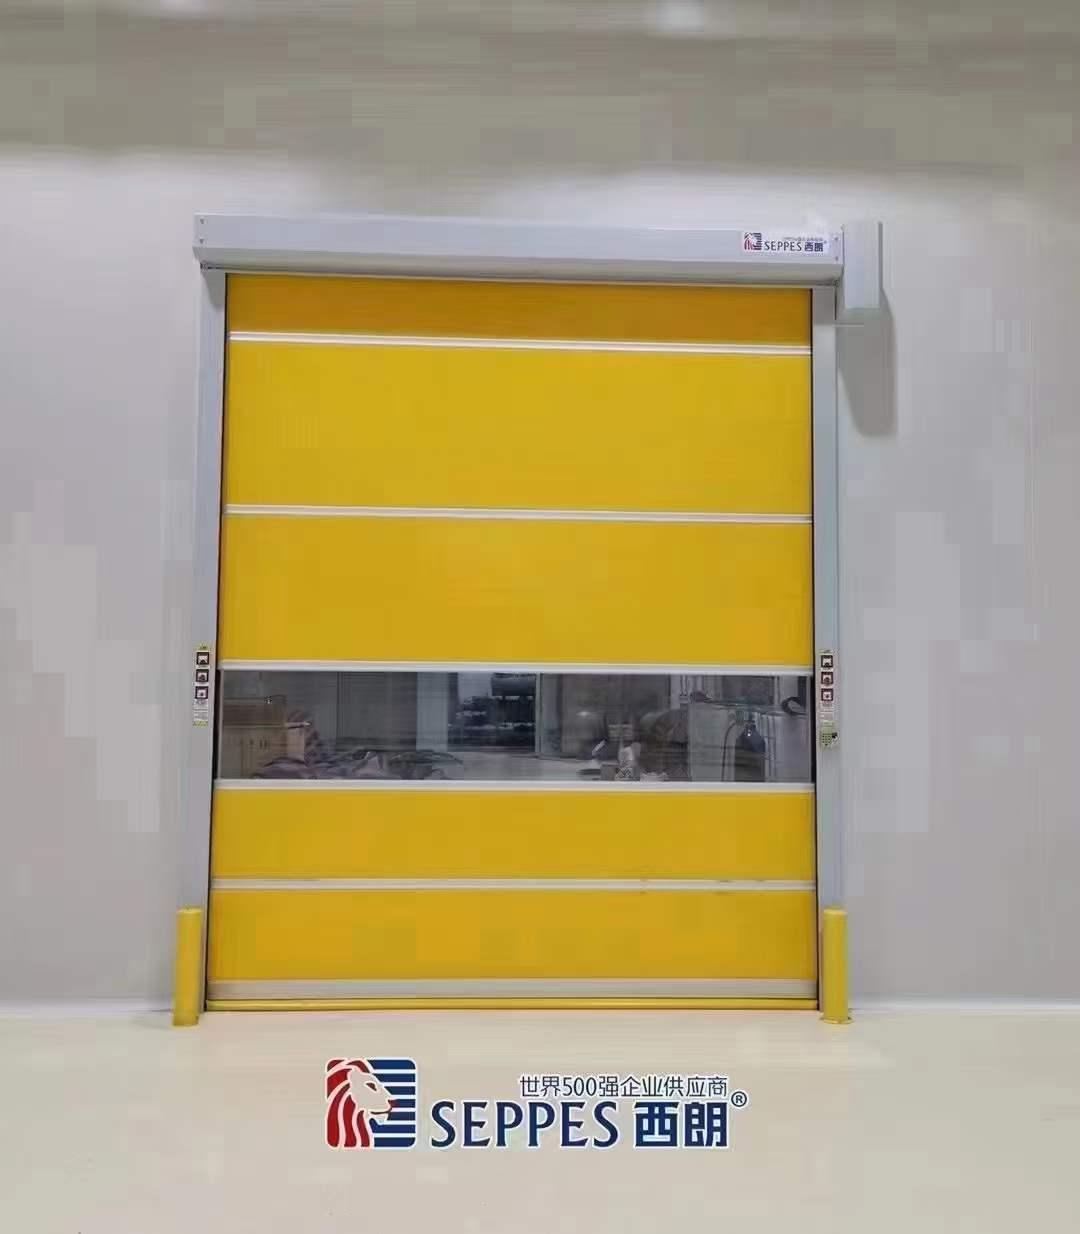 The benefits of installing high speed door in refrigerated warehouses